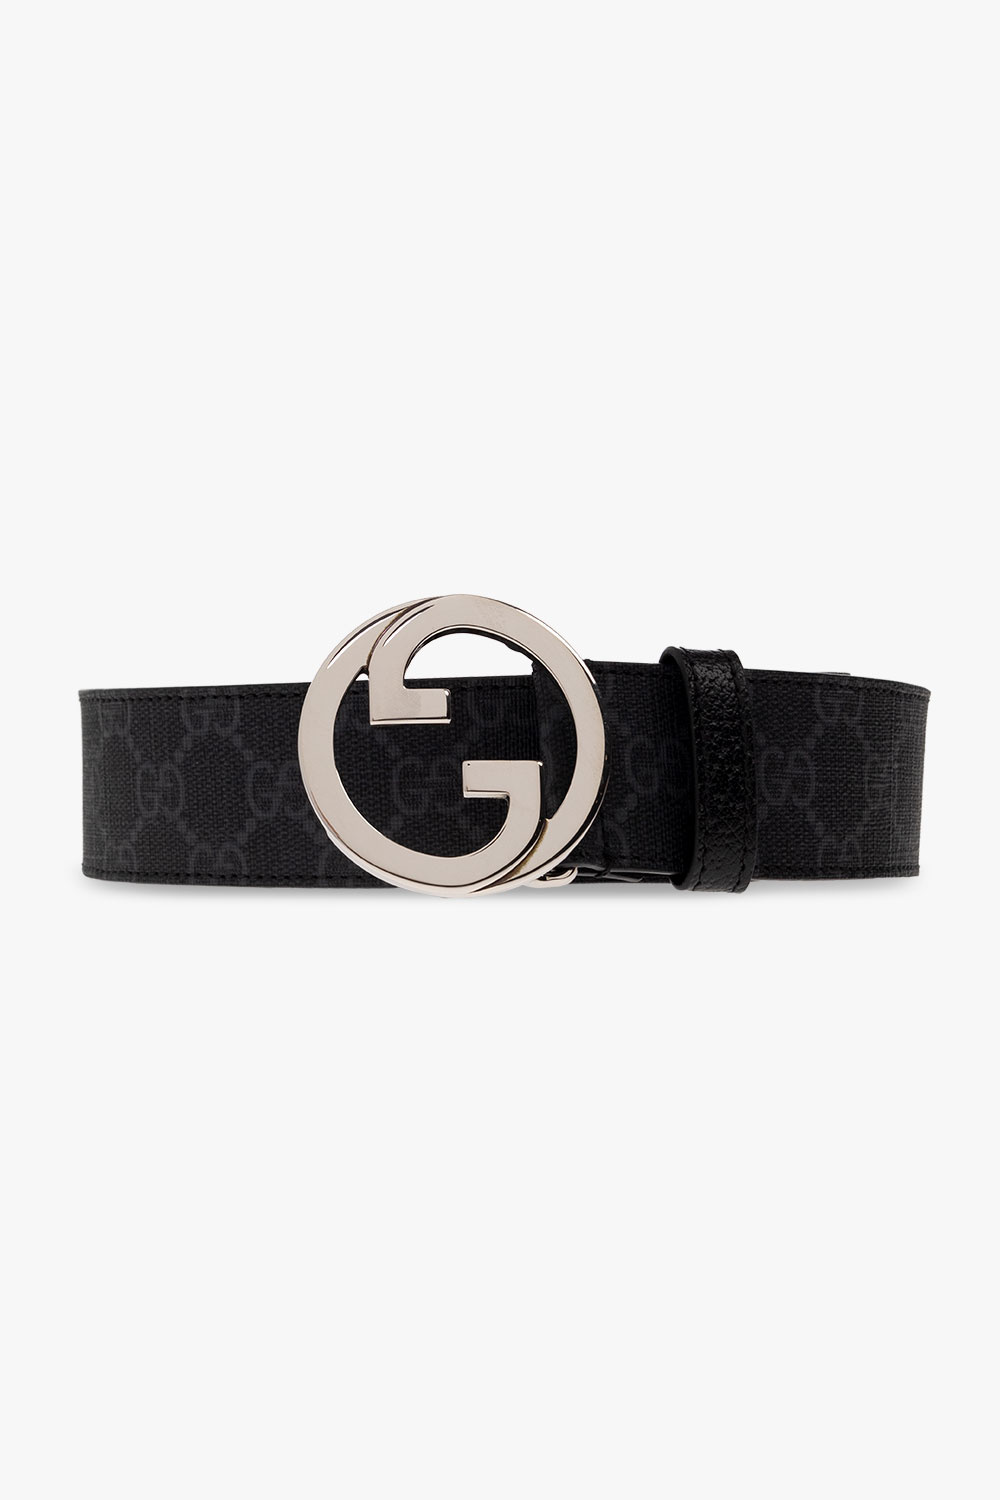 Gucci - GG-buckle GG Supreme-canvas Belt - Mens - Black